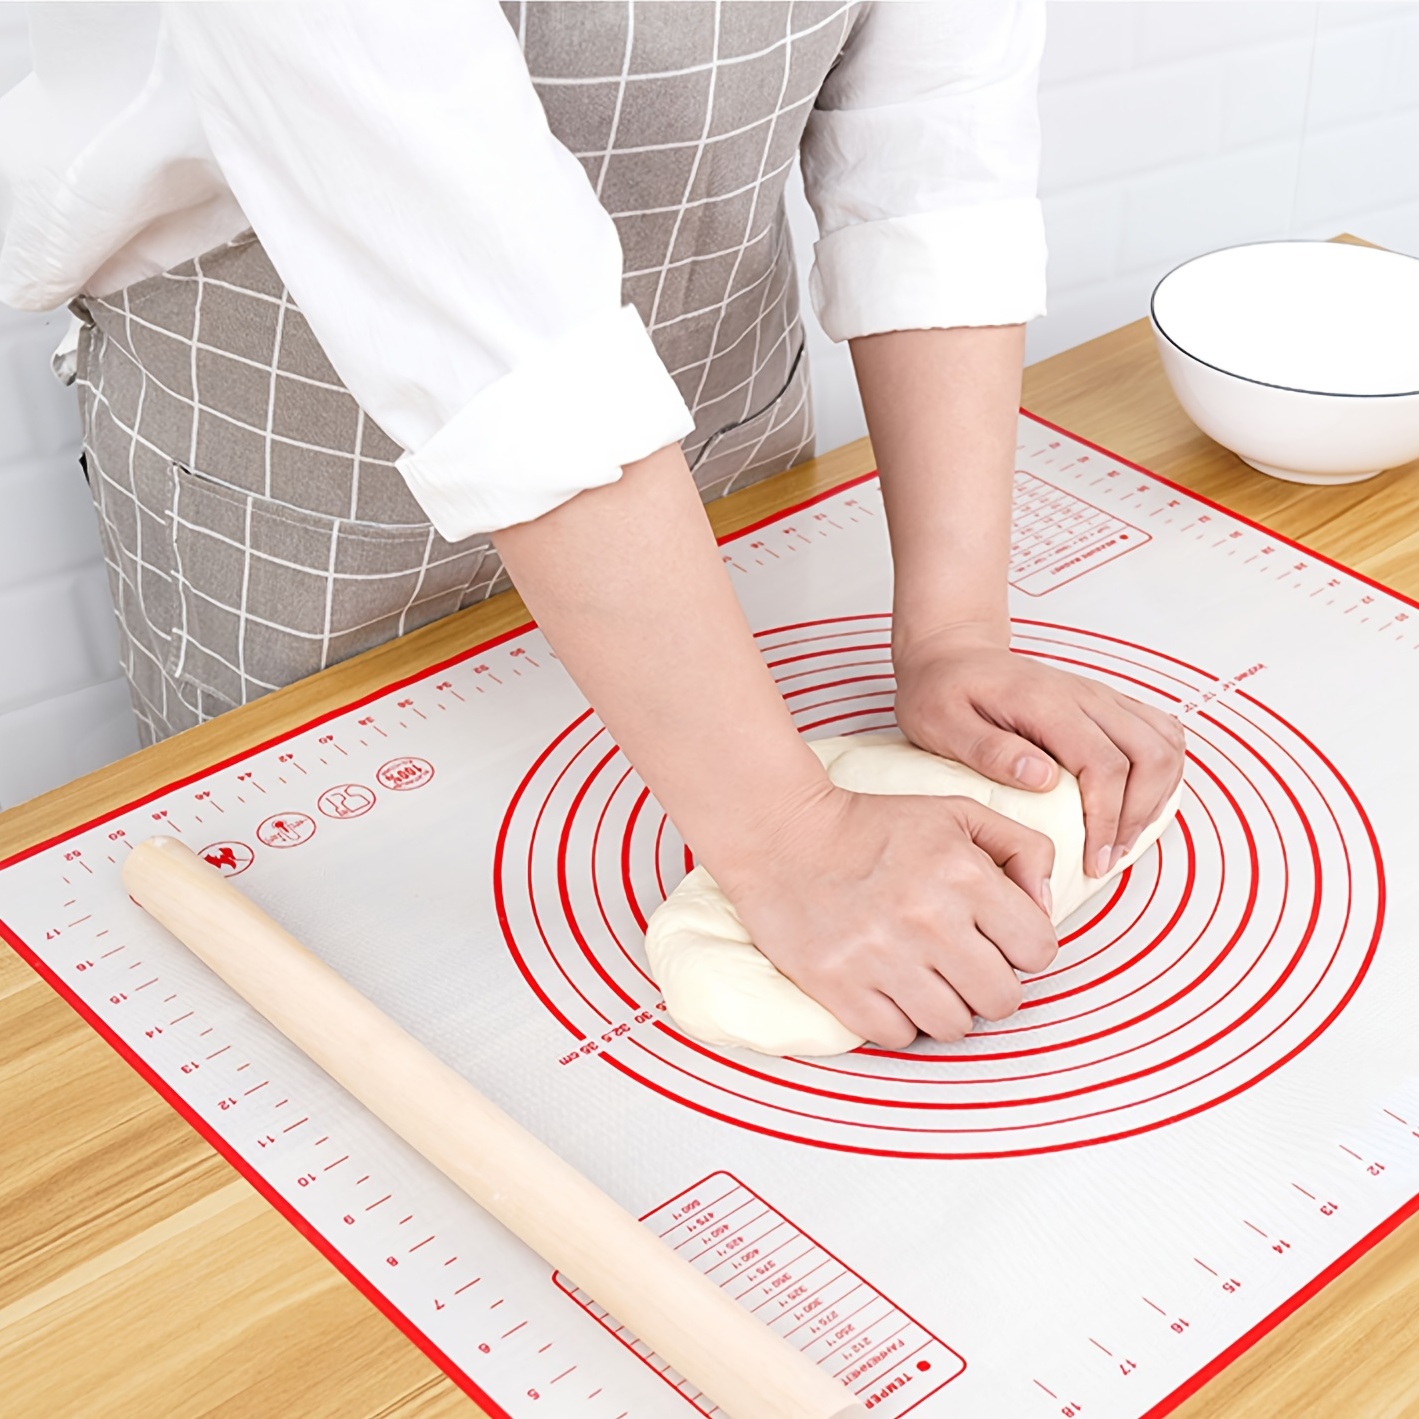 Cheap Silicone Baking Mat Pad Baking Sheet Pizza Dough Maker